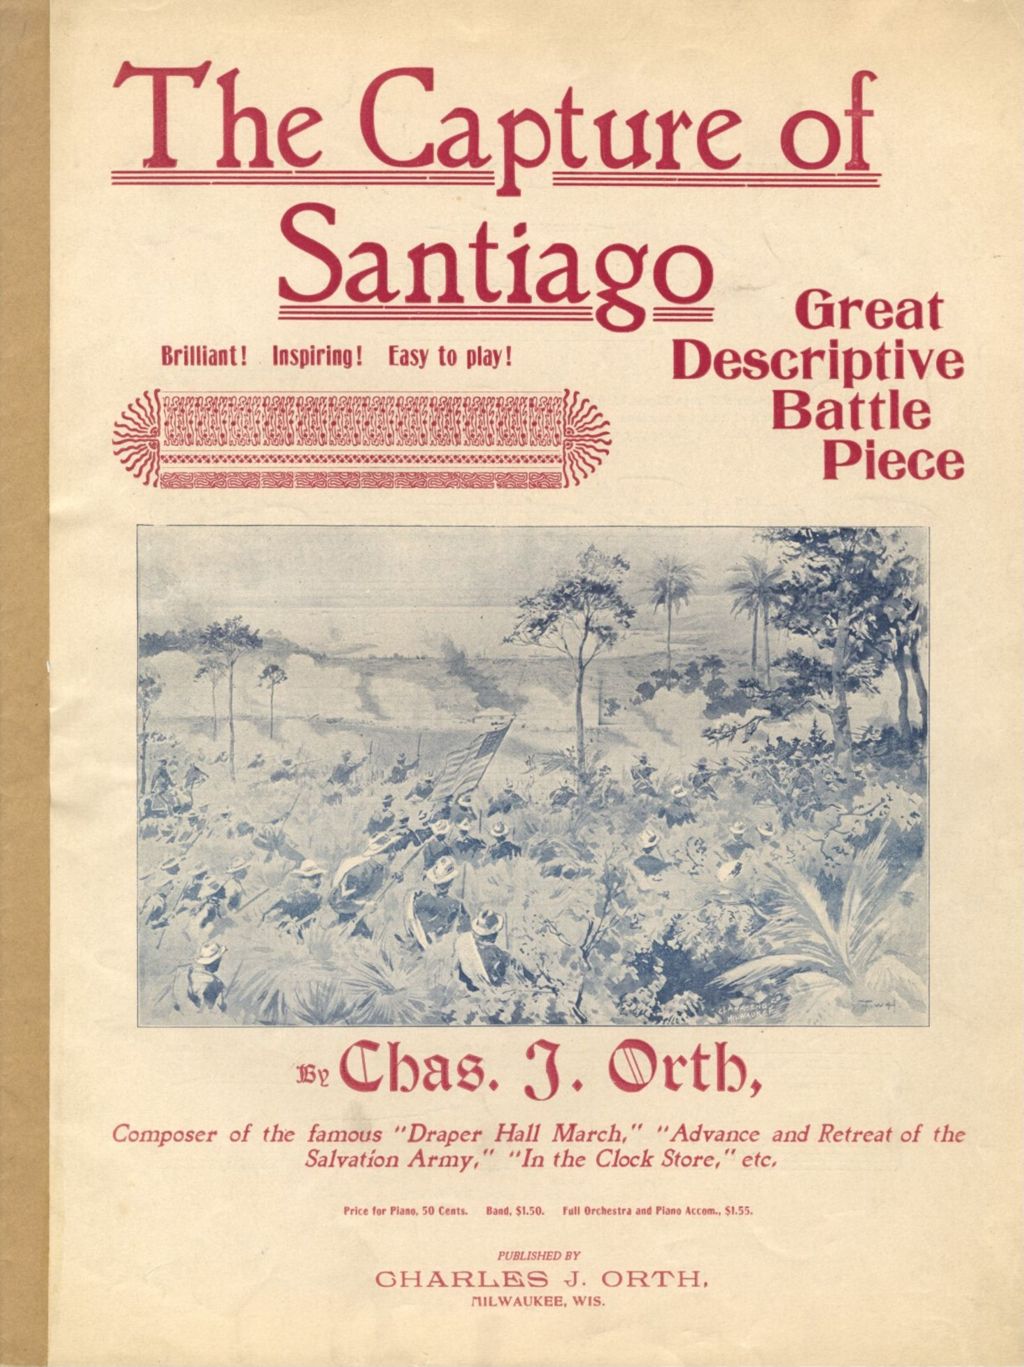 Miniature of Capture of Santiago